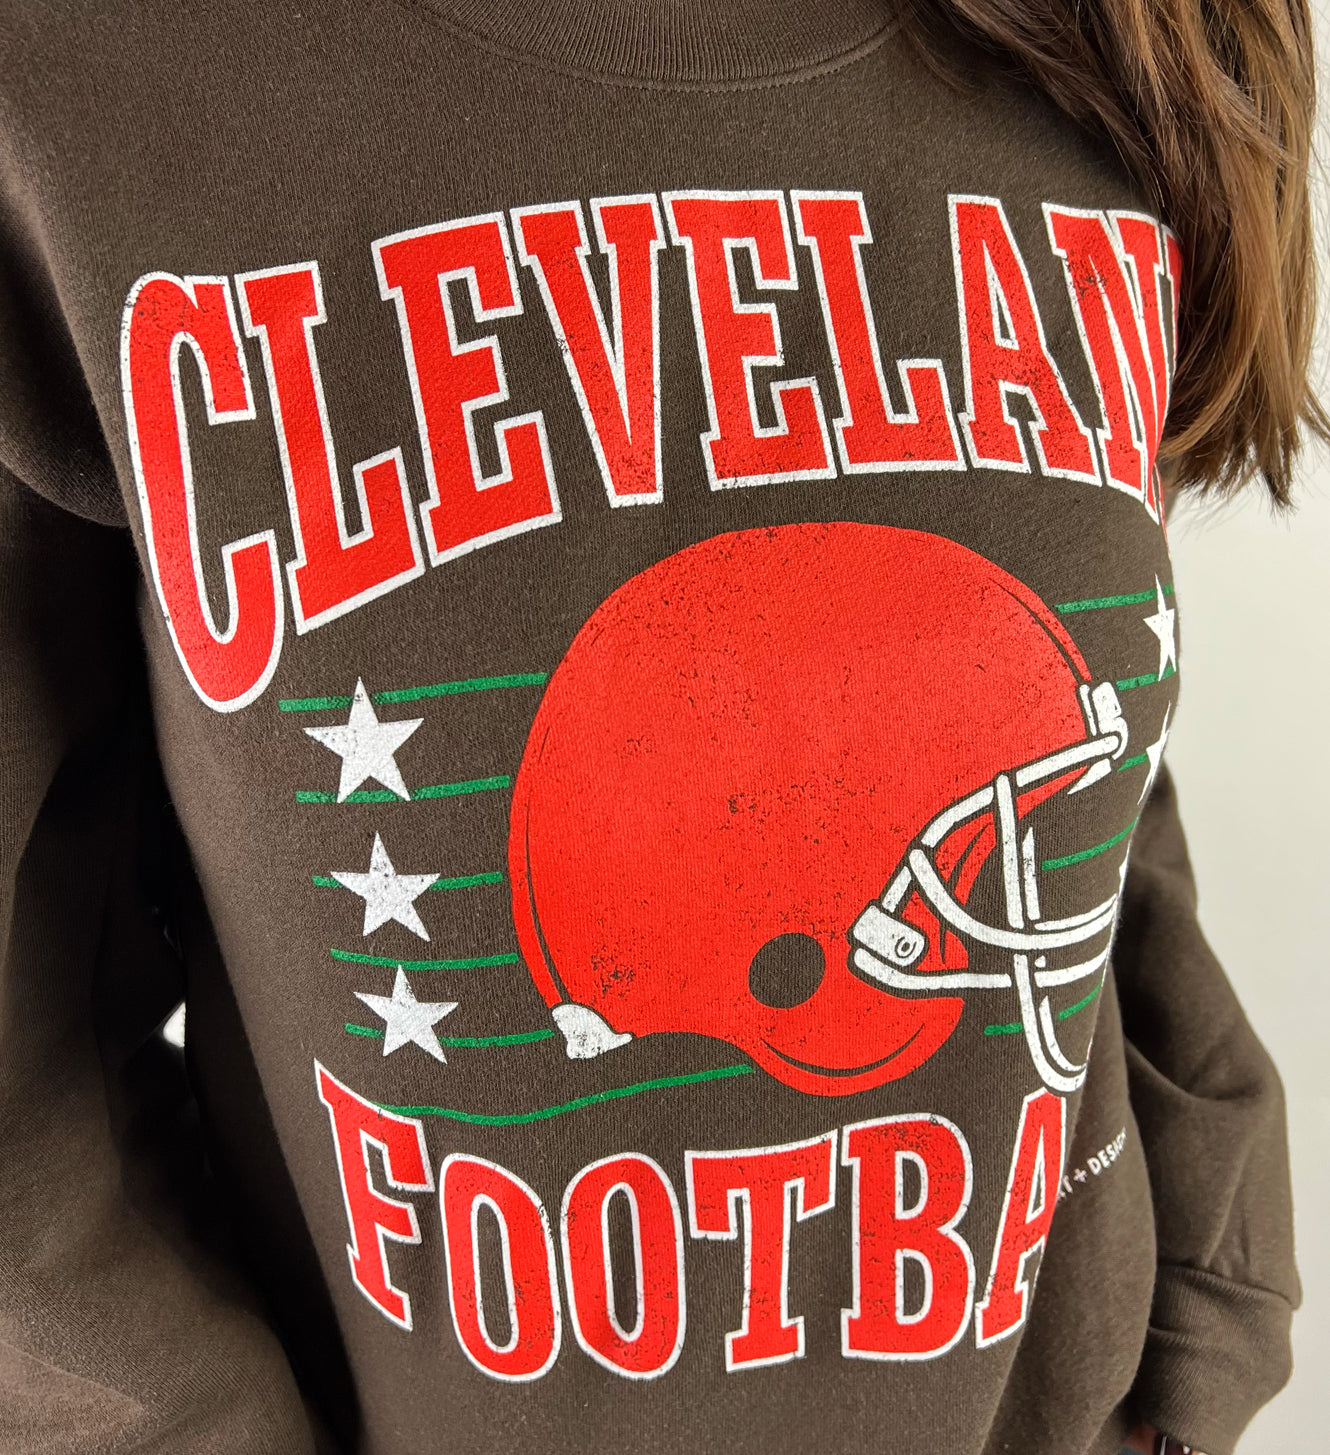 Vintage Cleveland Browns Crewneck on Mercari  Vintage crewneck sweatshirt,  Sweatshirt designs, Brown crewneck